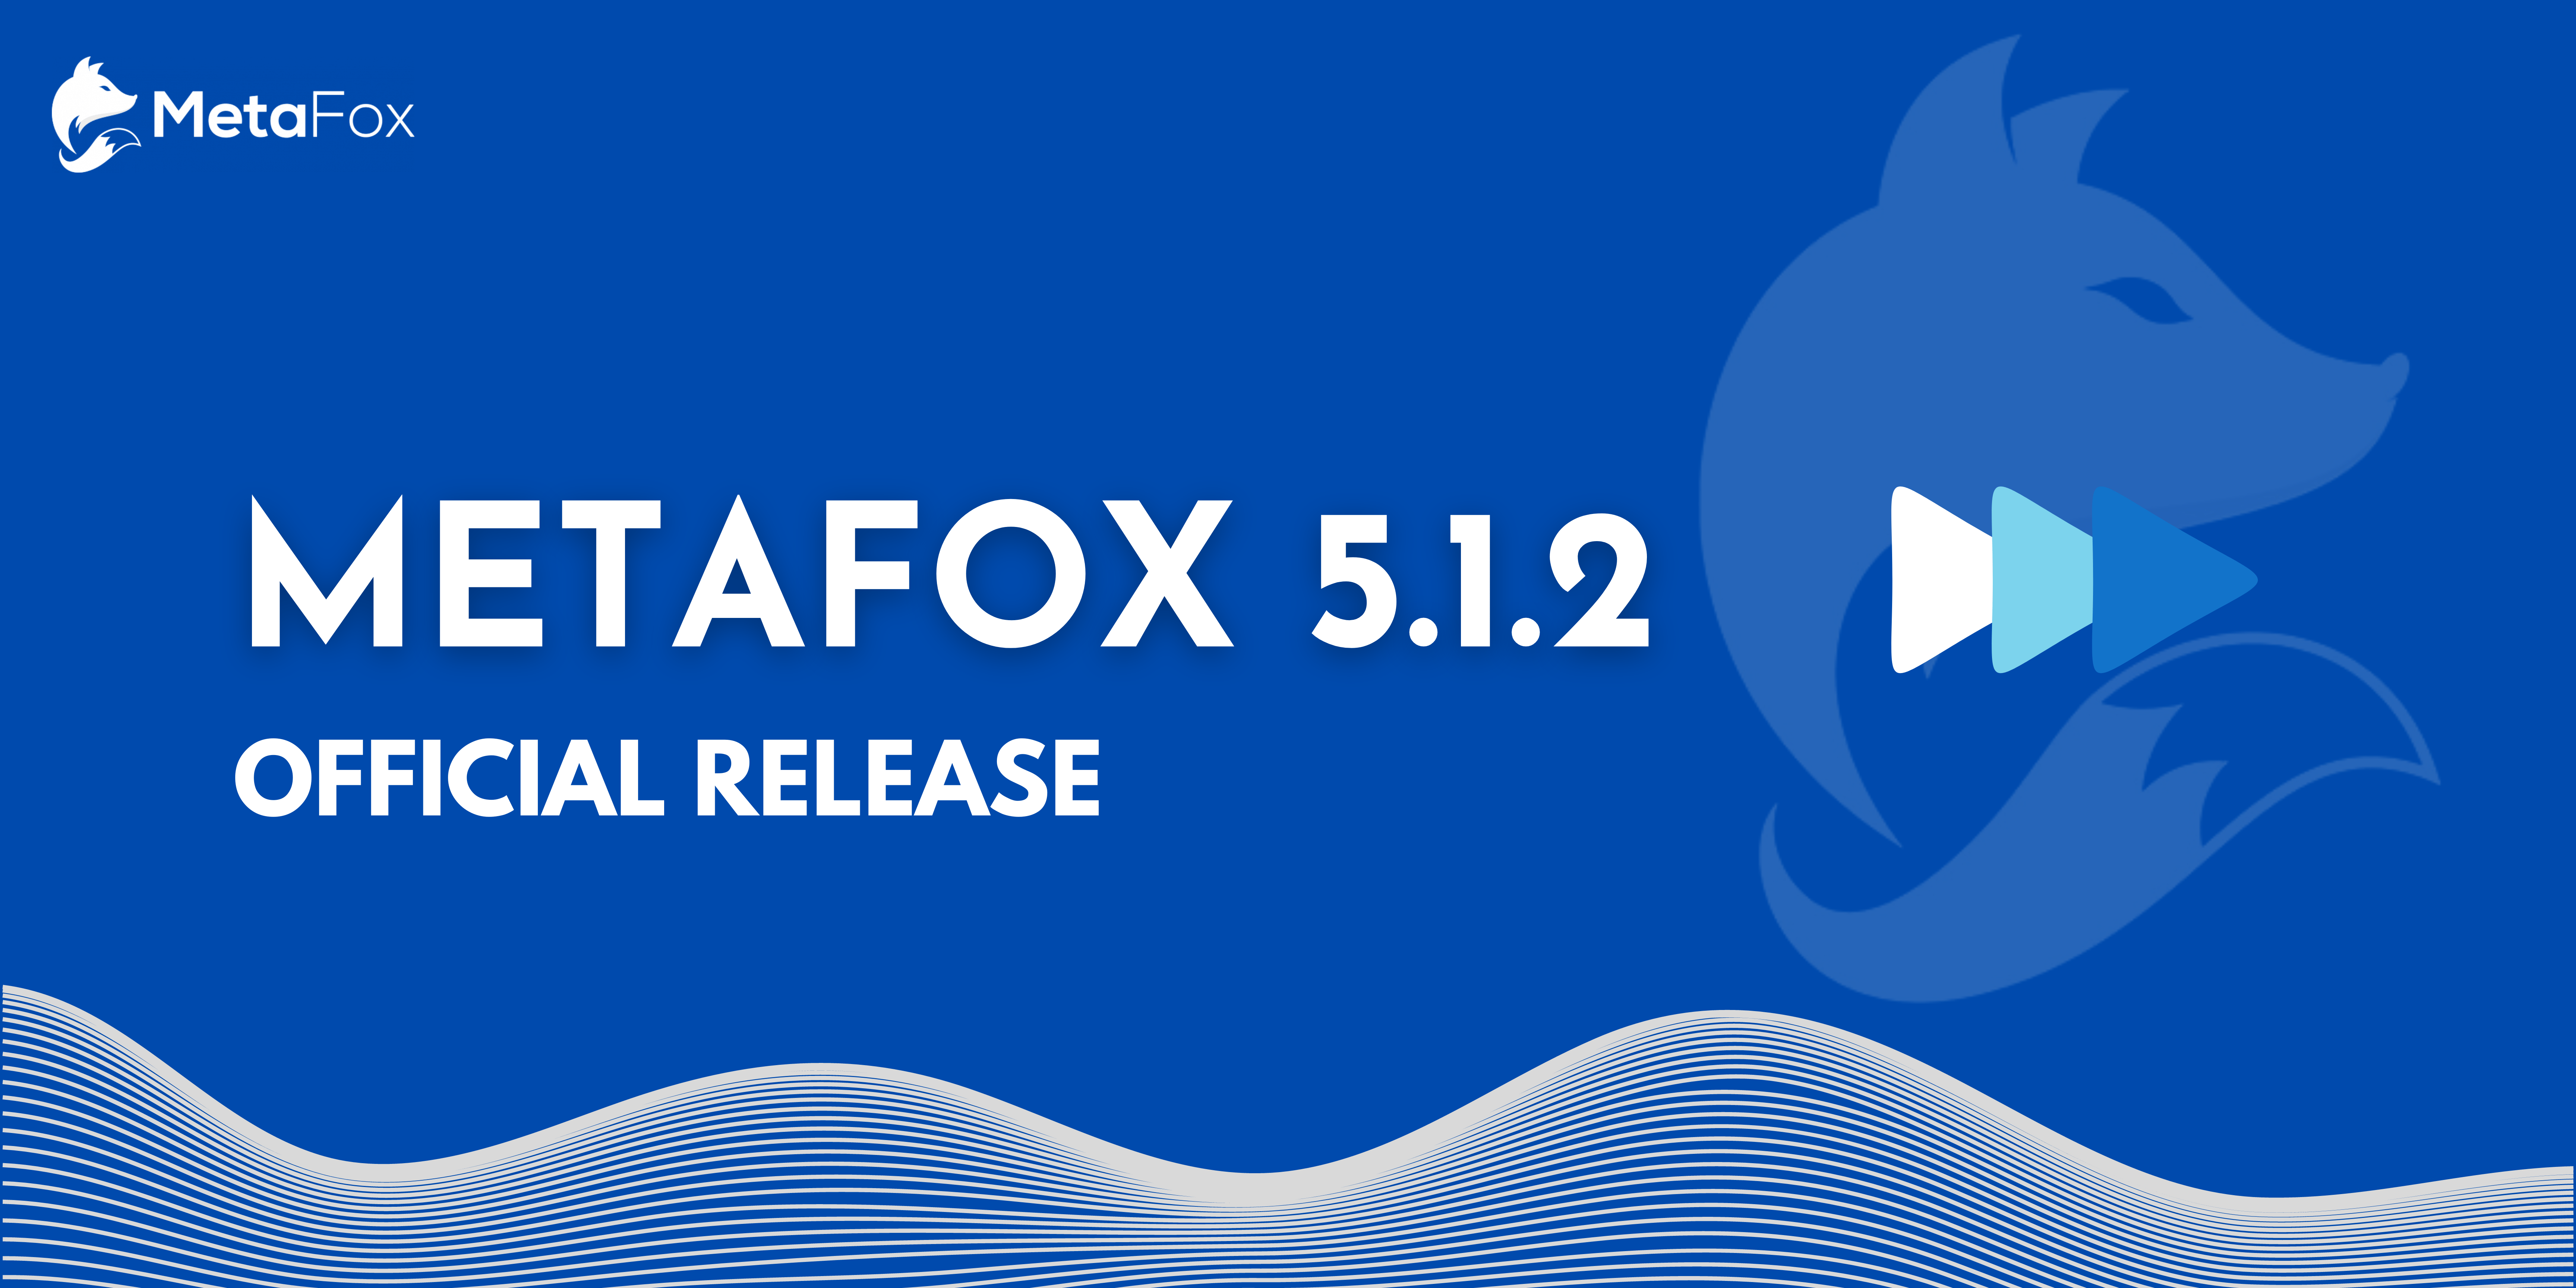 MetaFox 5.1.2 Official Release